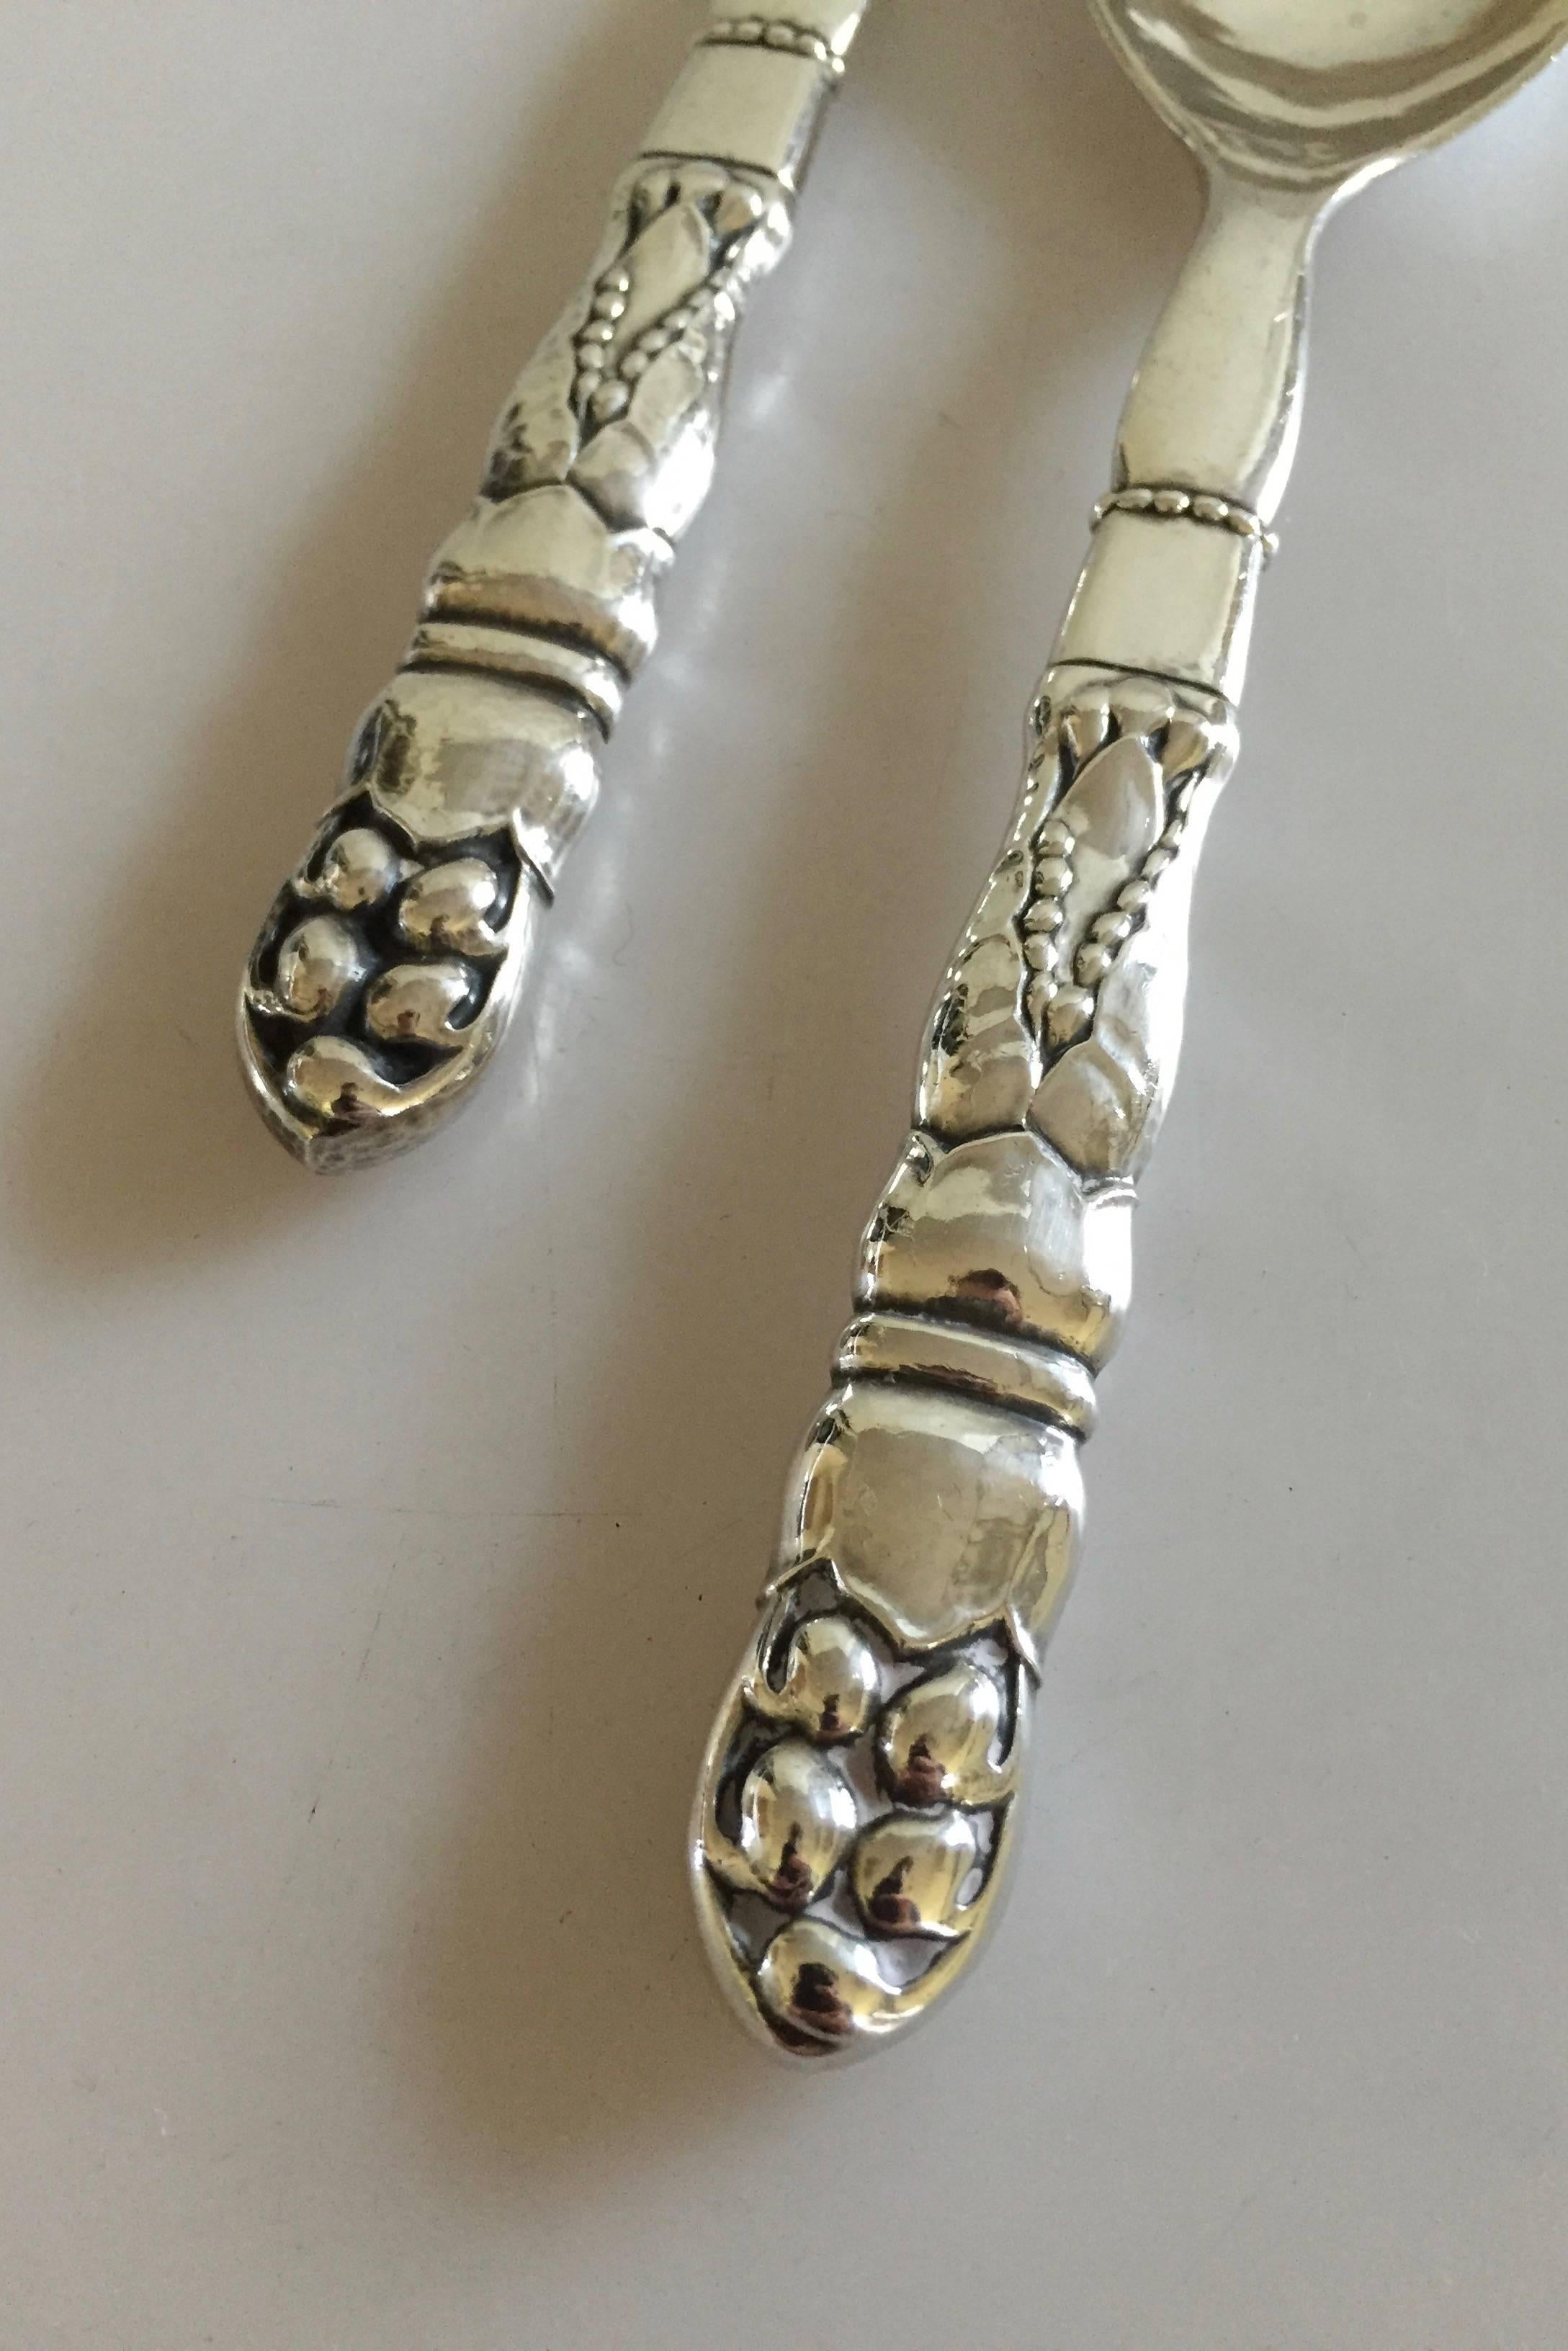 Georg Jensen sterling Silver 'Ornamental' Salatservers #54.

Measures: 22 cm L (8 21/32